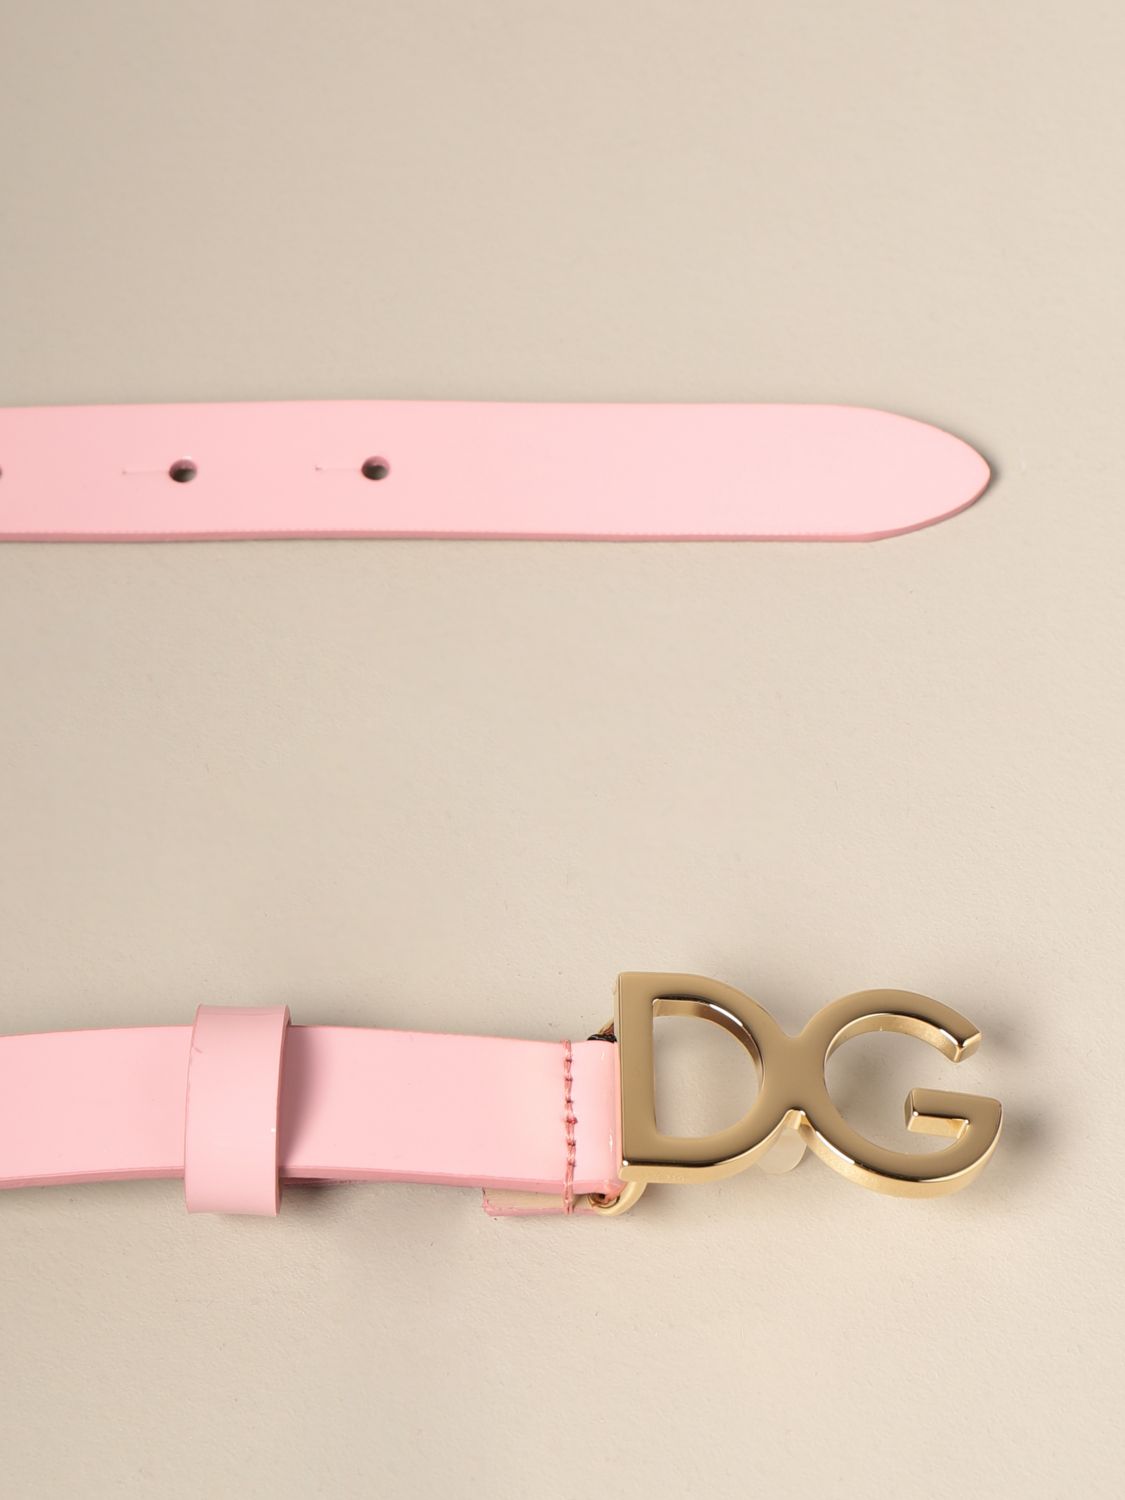 dolce and gabbana pink belt